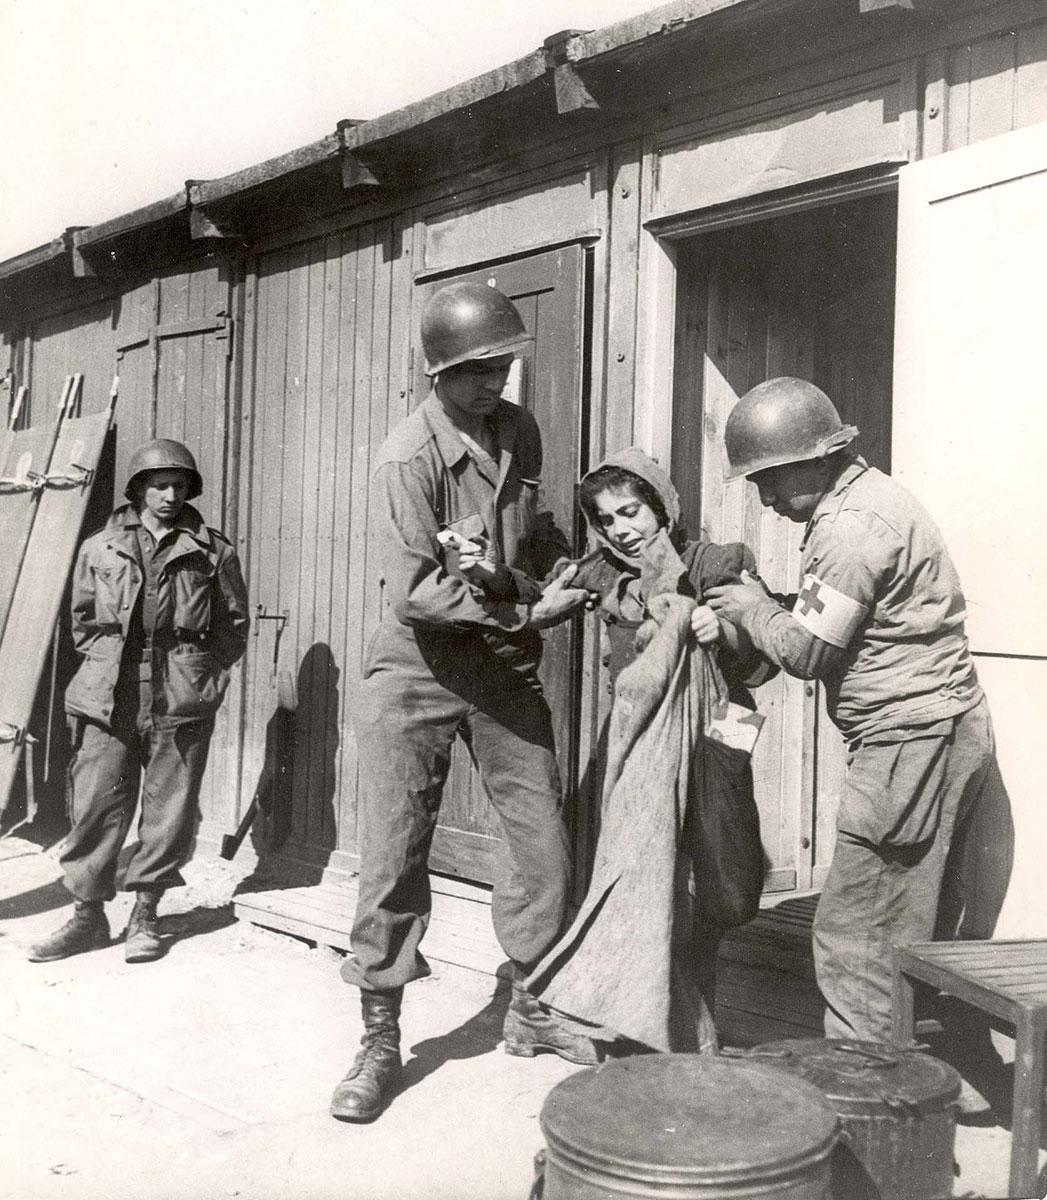 US soldiers help a survivor, Penig concentration camp, Germany, April 1945